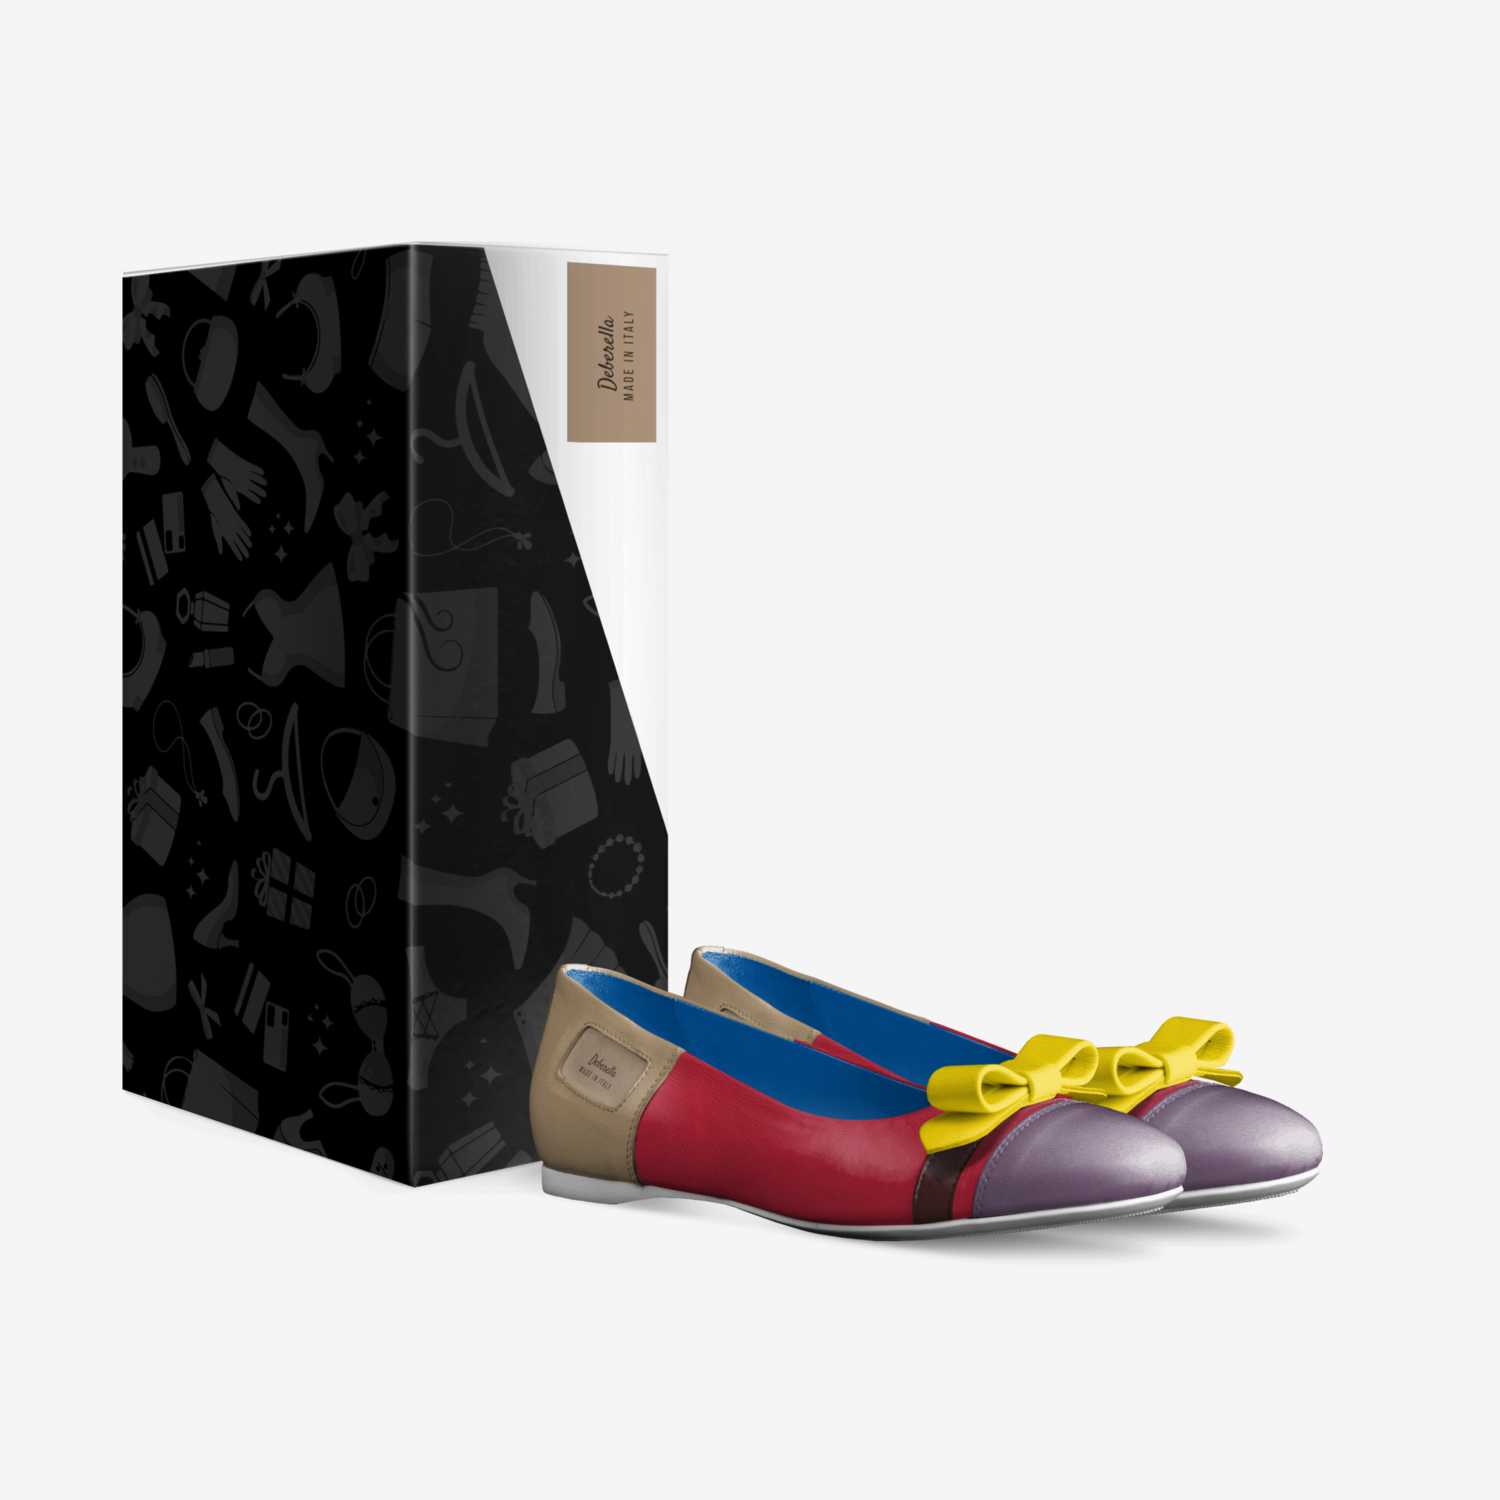 Deberella custom made in Italy shoes by Deborah Graham | Box view